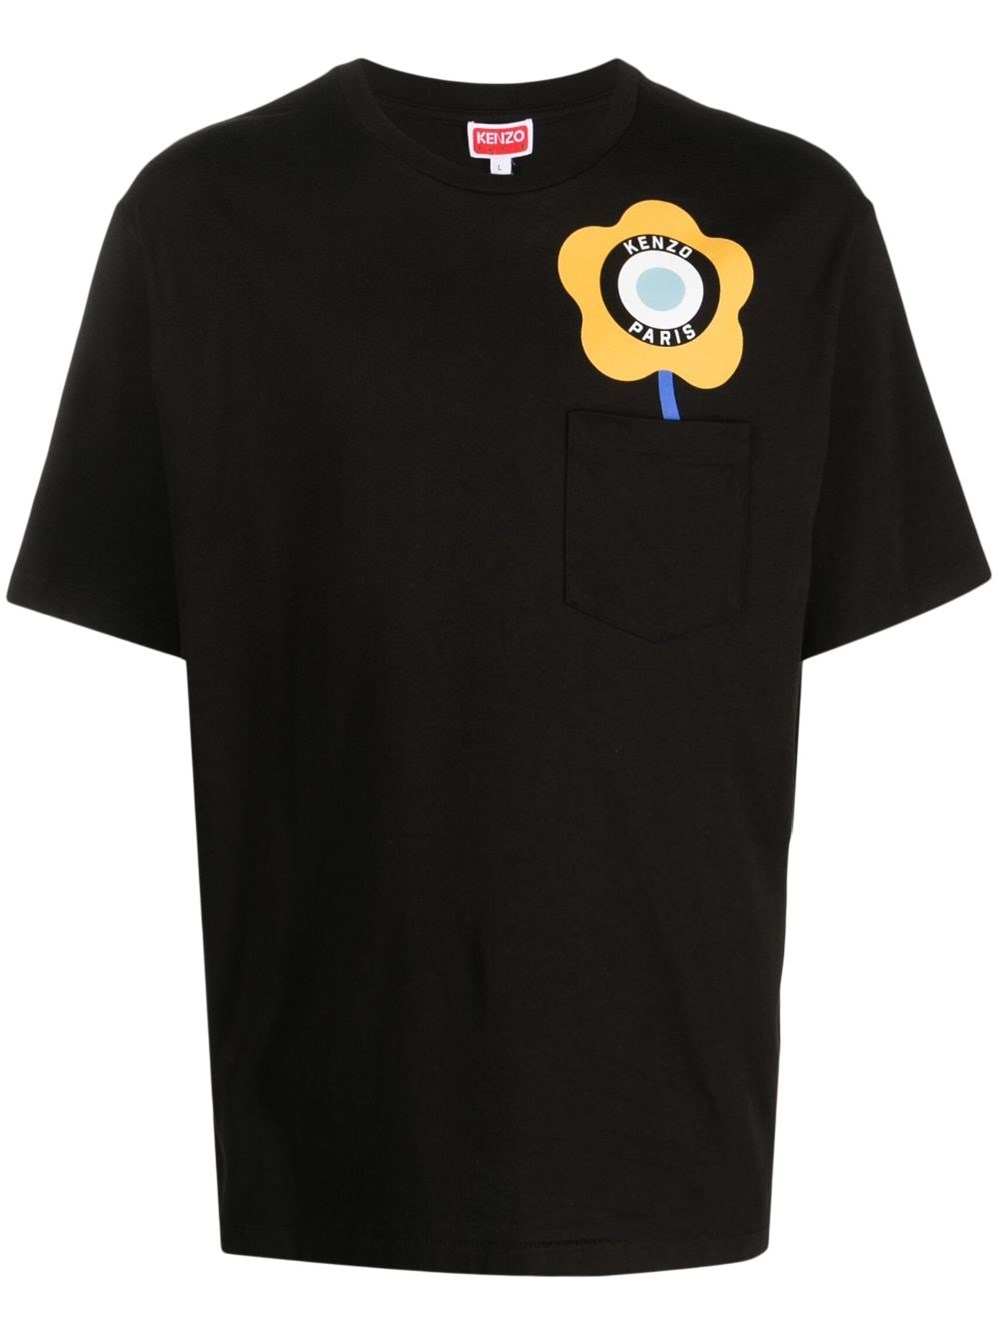 kenzo Kenzo Target T-Shirt available on theapartmentcosenza.com